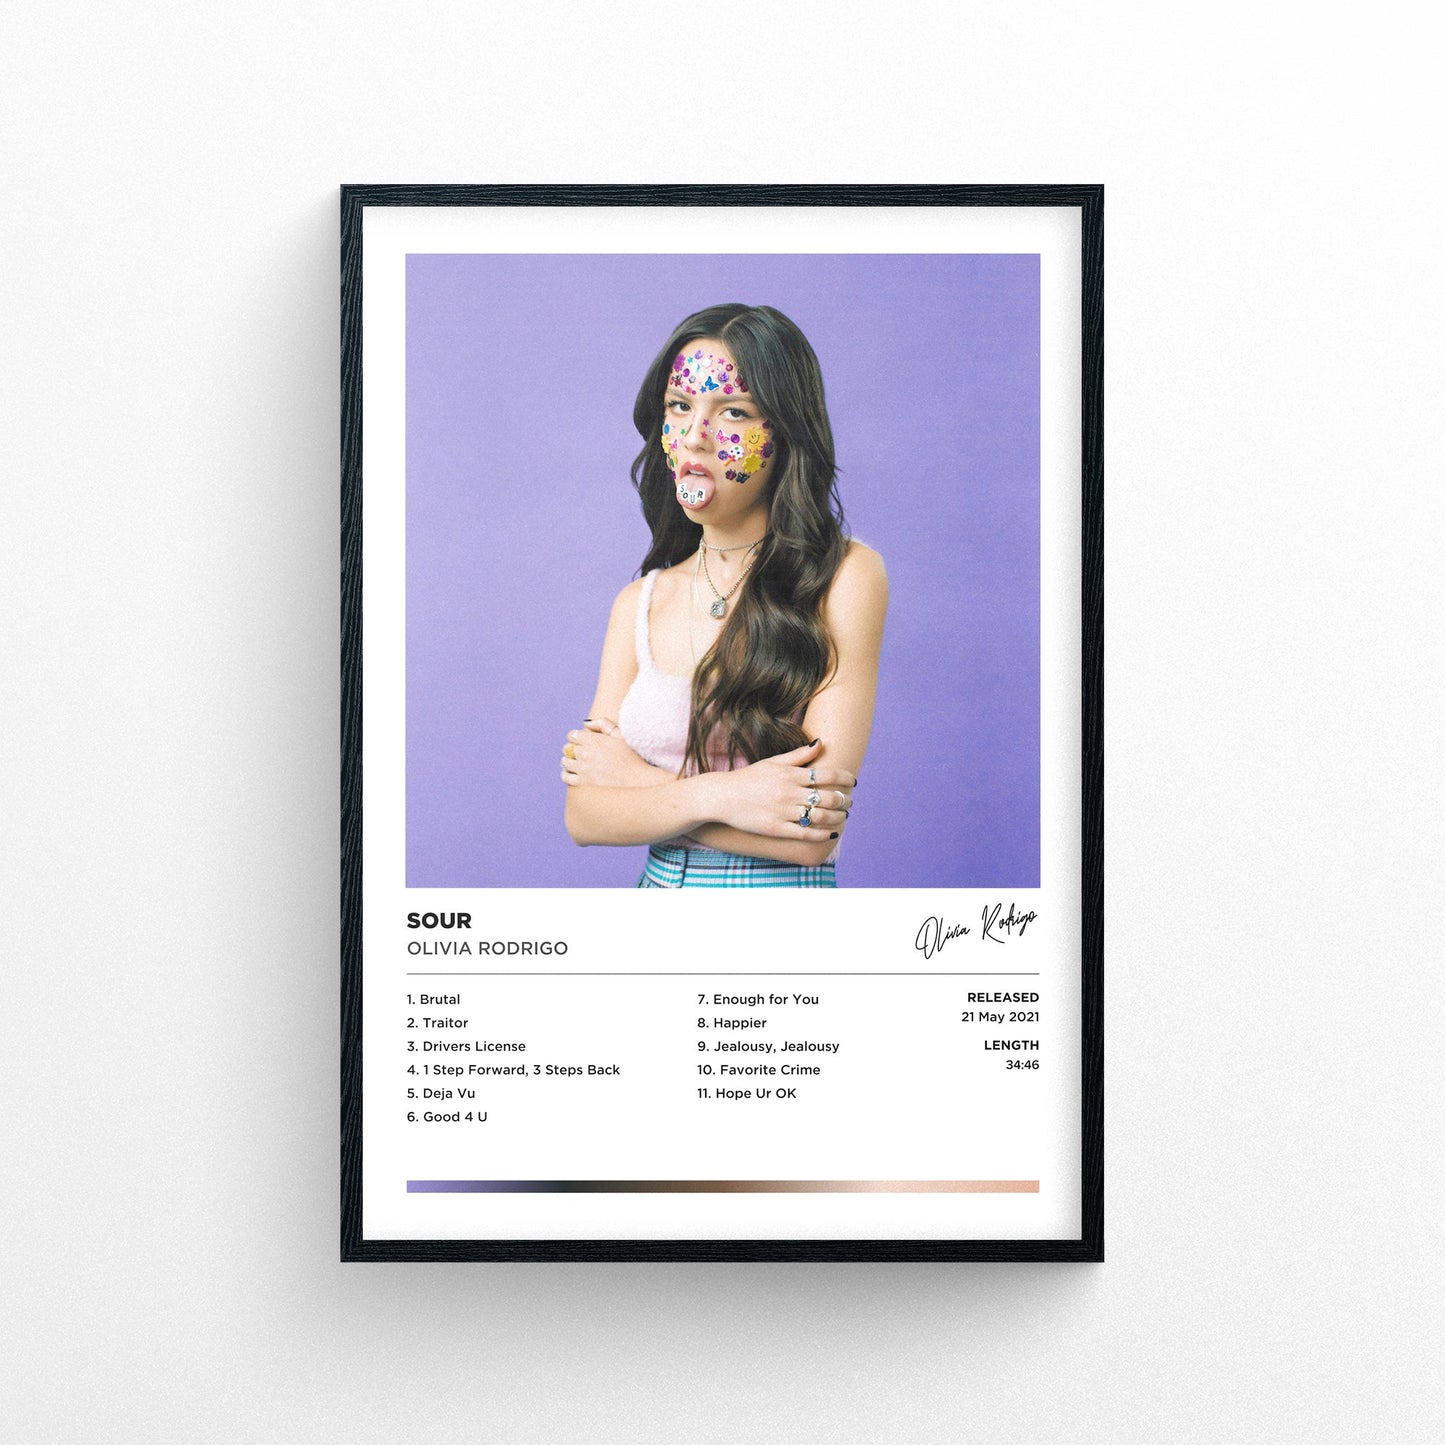 Olivia Rodrigo - Sour Framed Poster Print | Polaroid Style | Album Cover Artwork